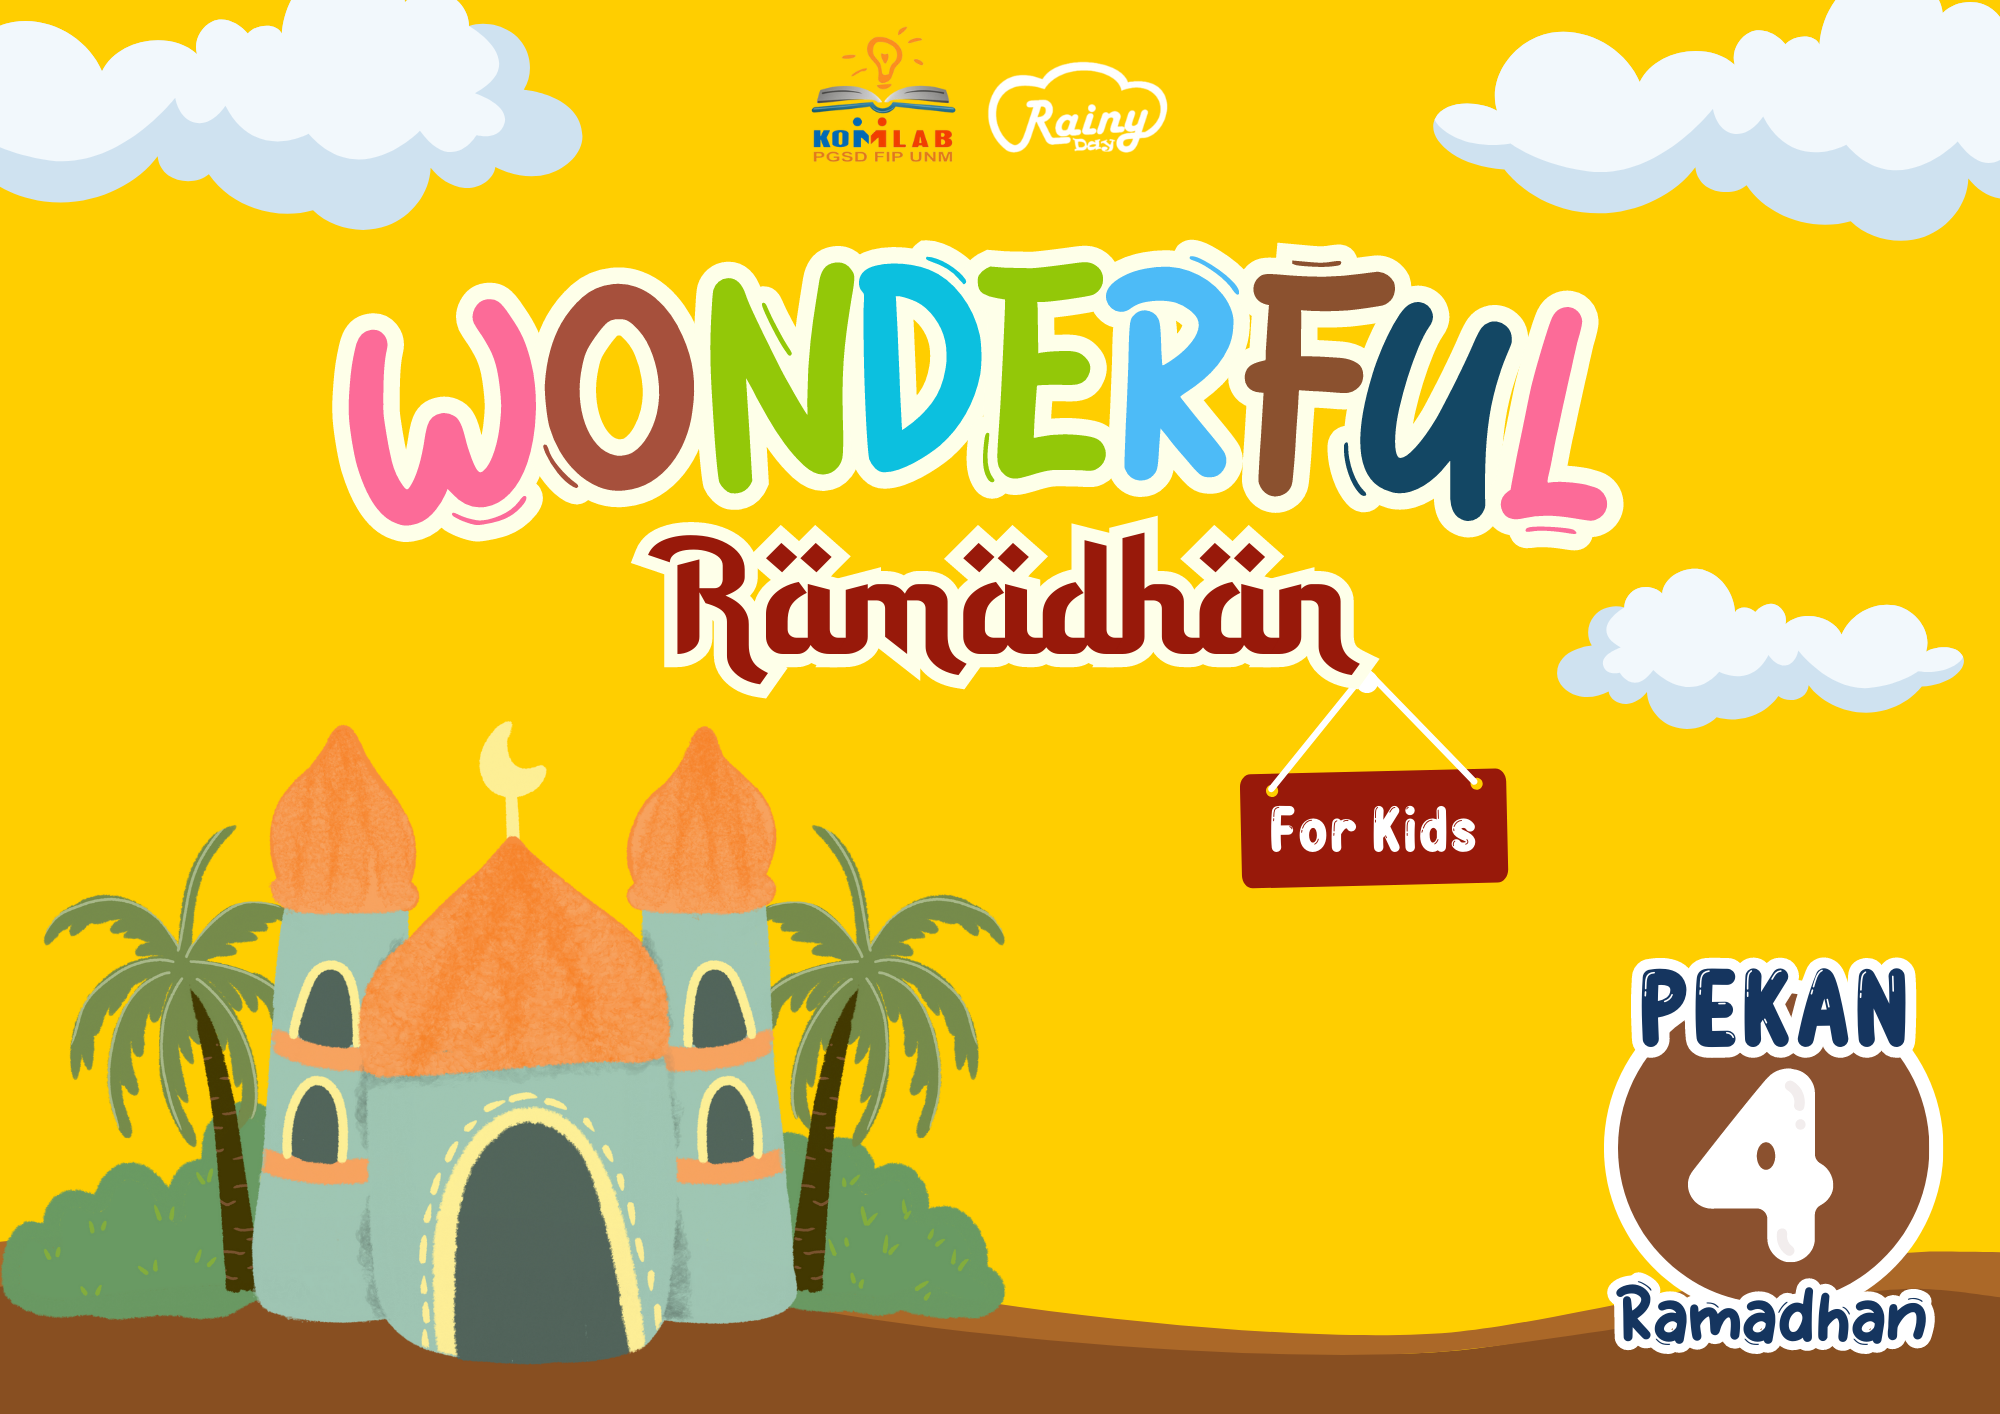 Wonderful Ramadhan 3